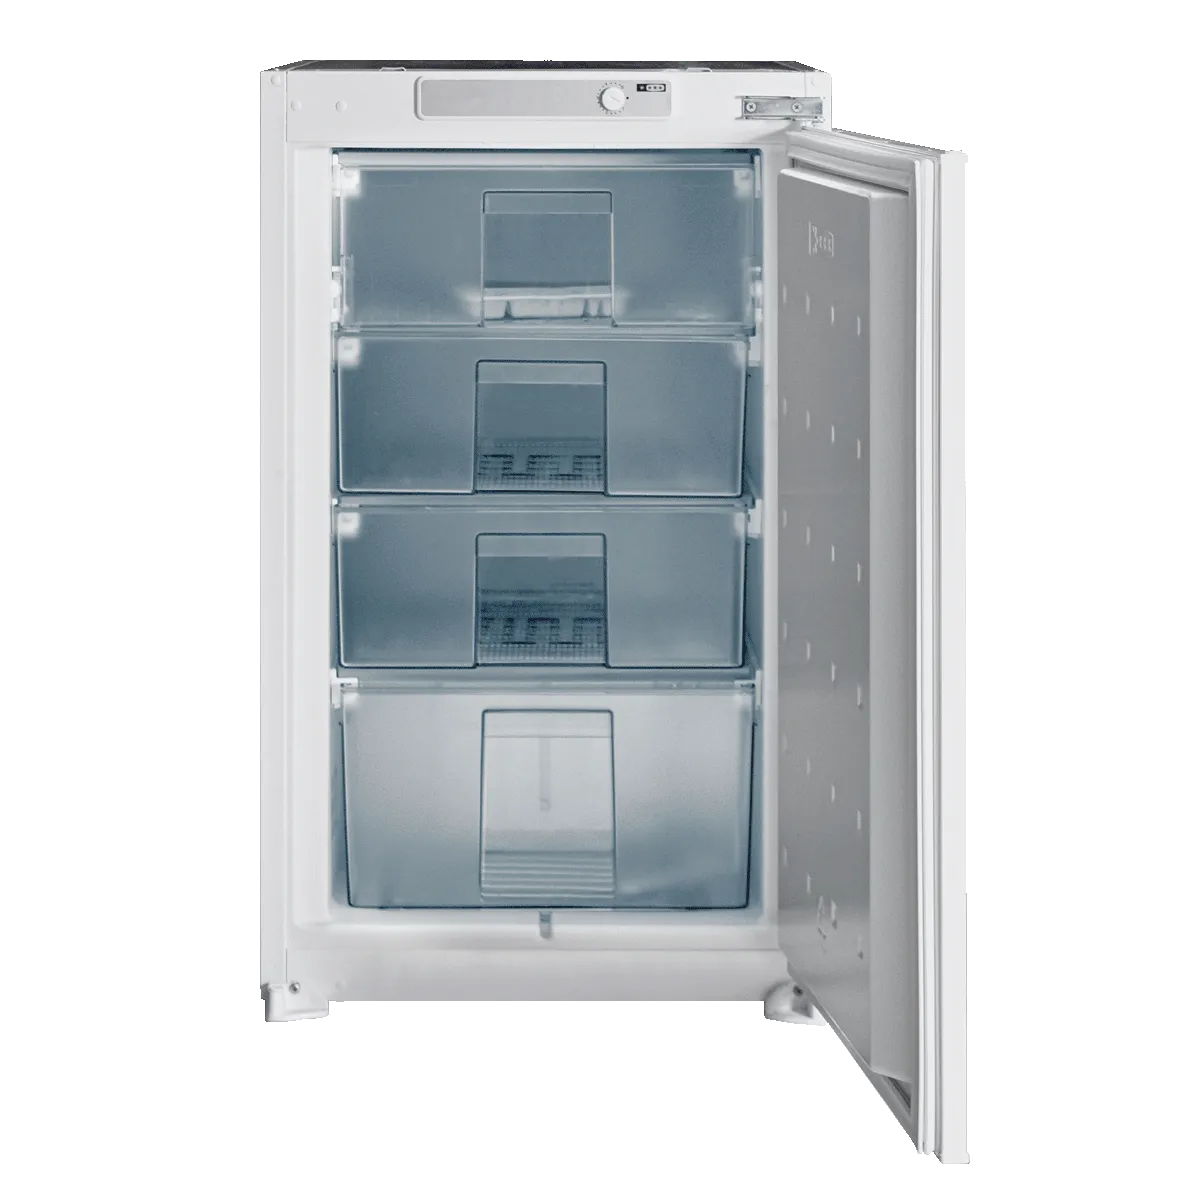 Built-in freezer IVF 1450 F 